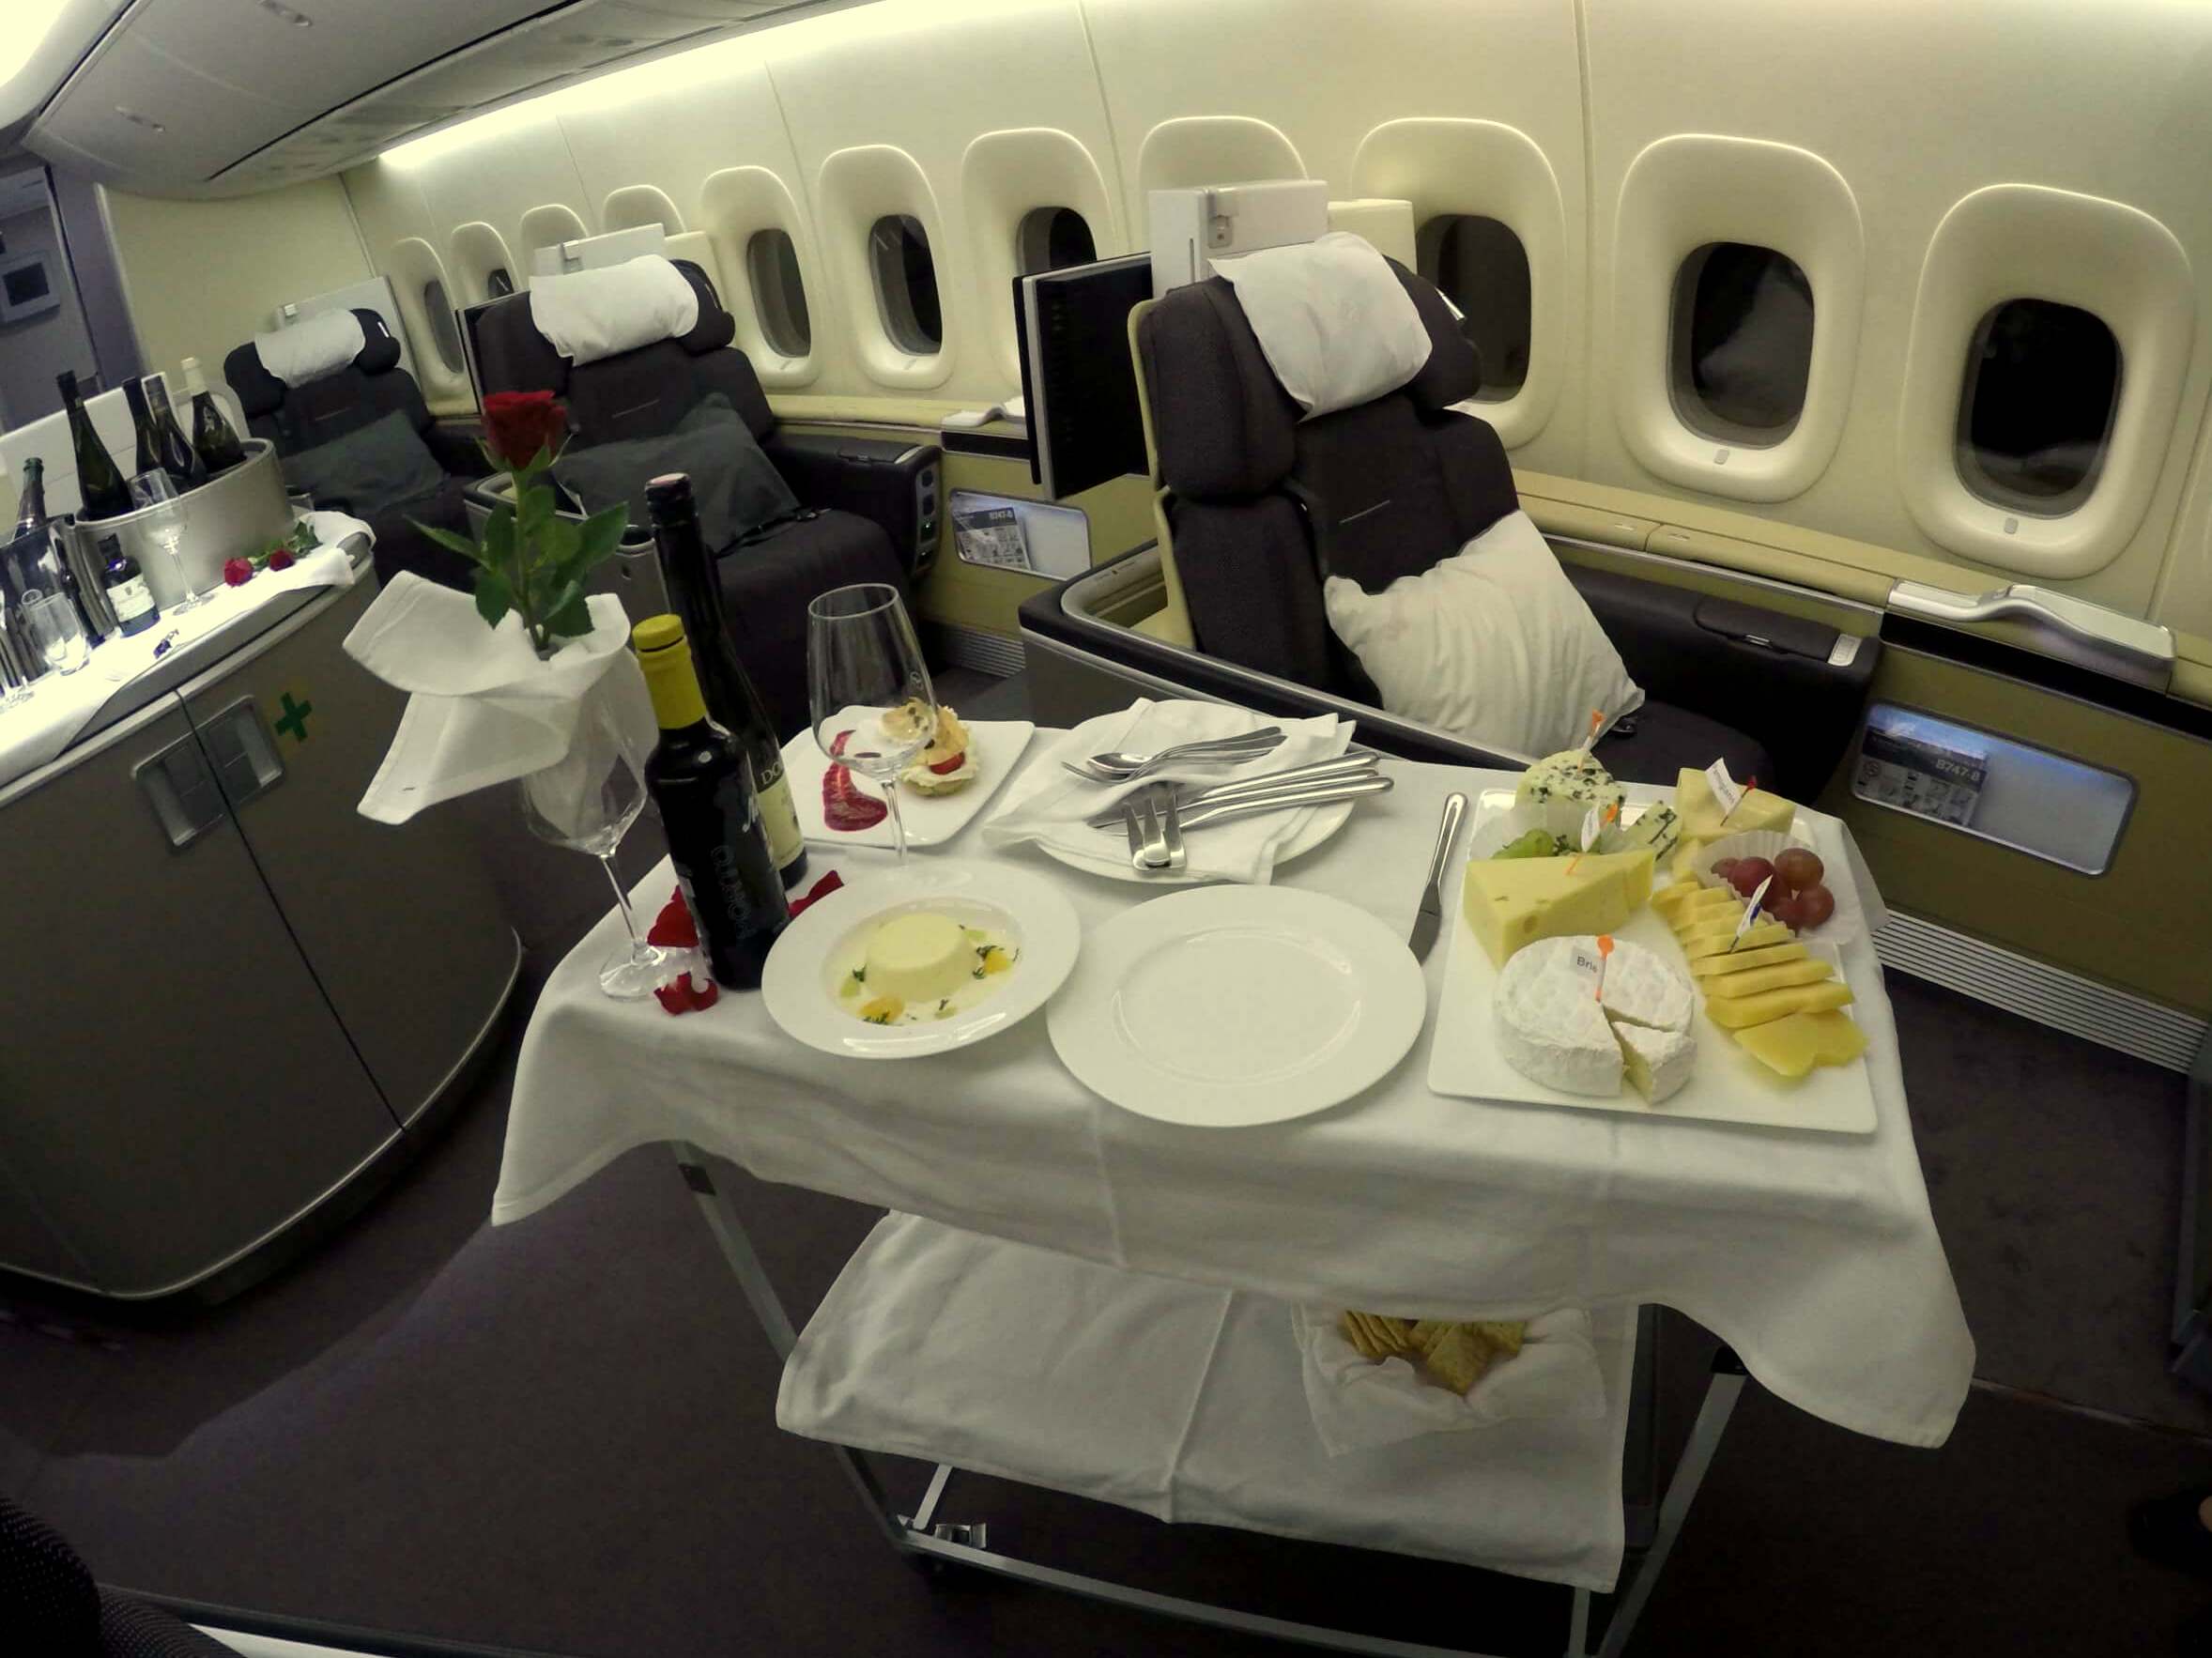 Postres y quesos, Lufthansa first class